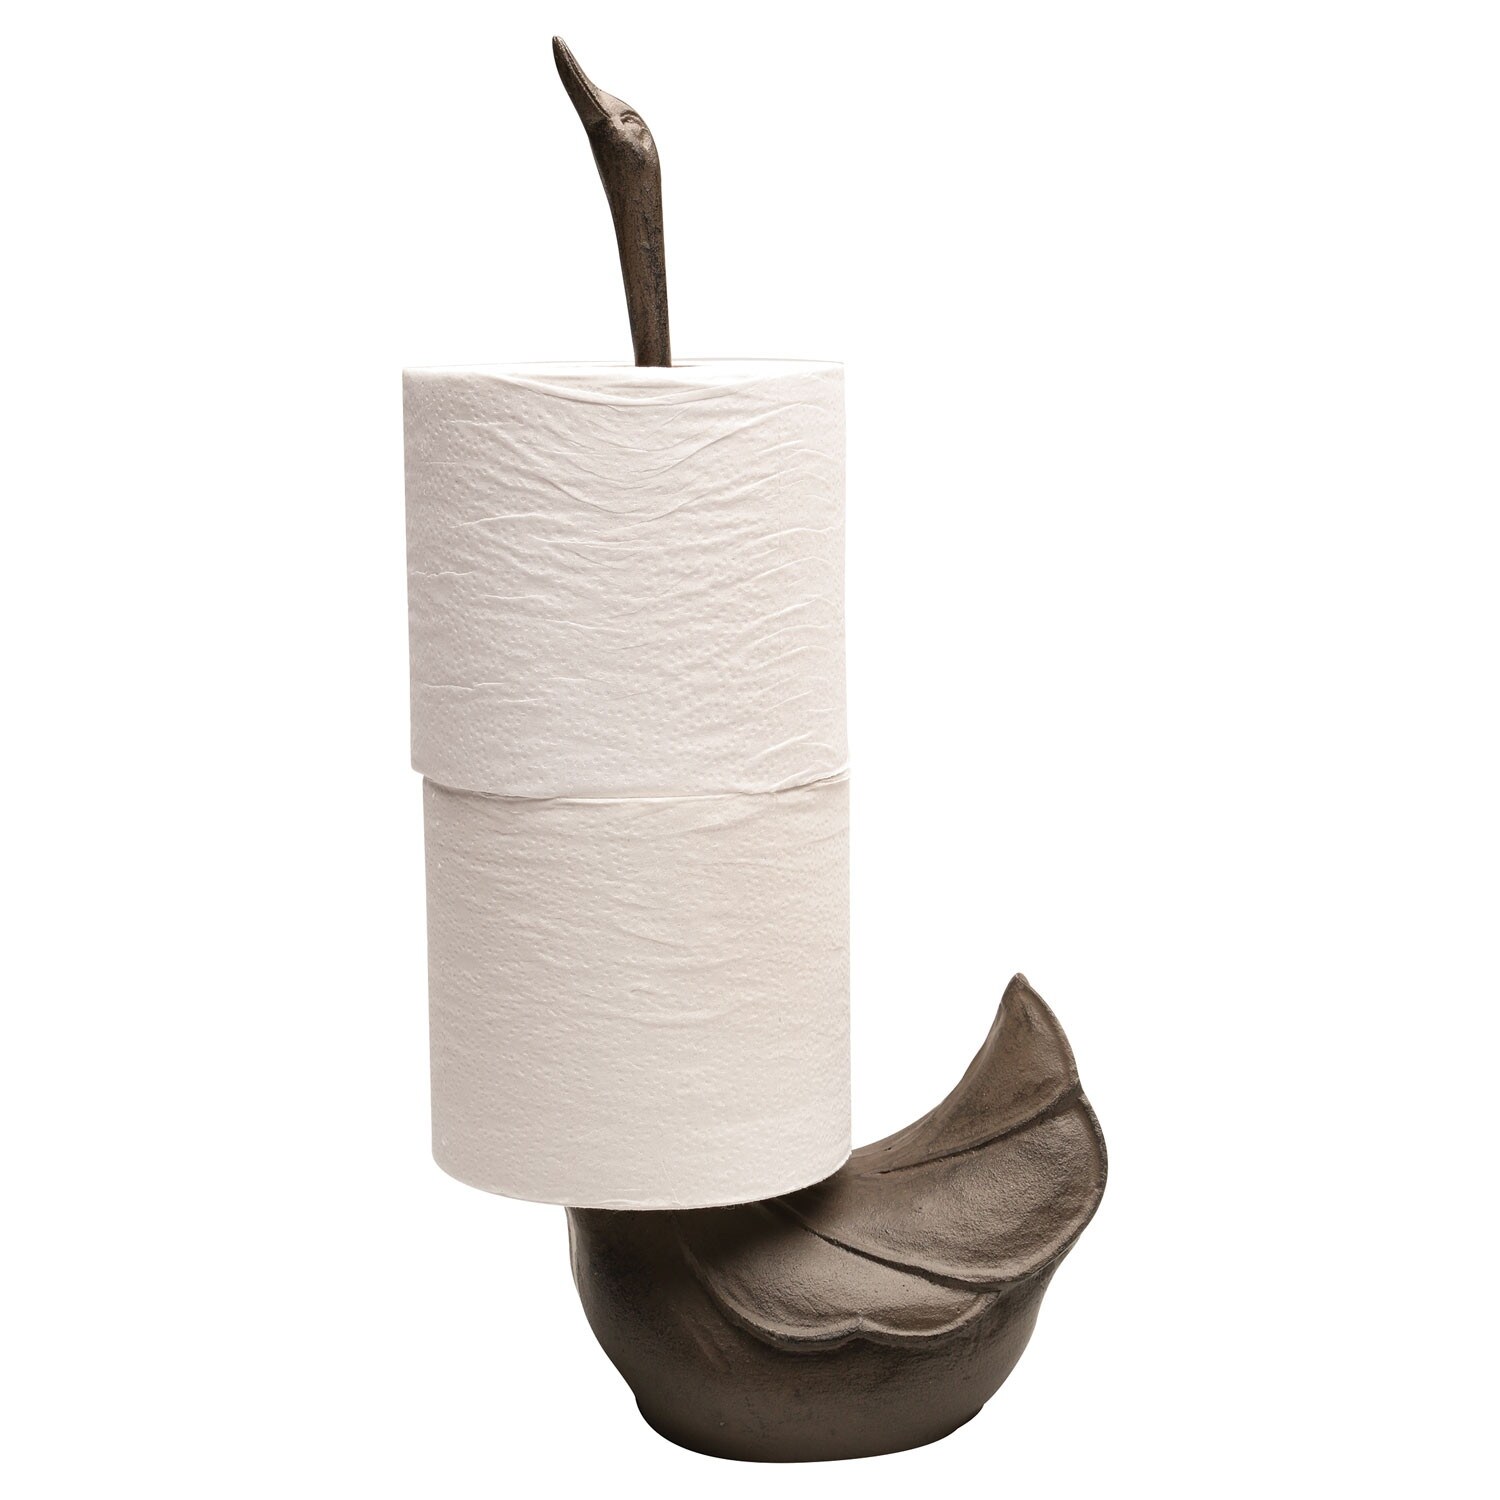 Shop Art Artifact Black Swan Toilet Paper Holder Cast Iron